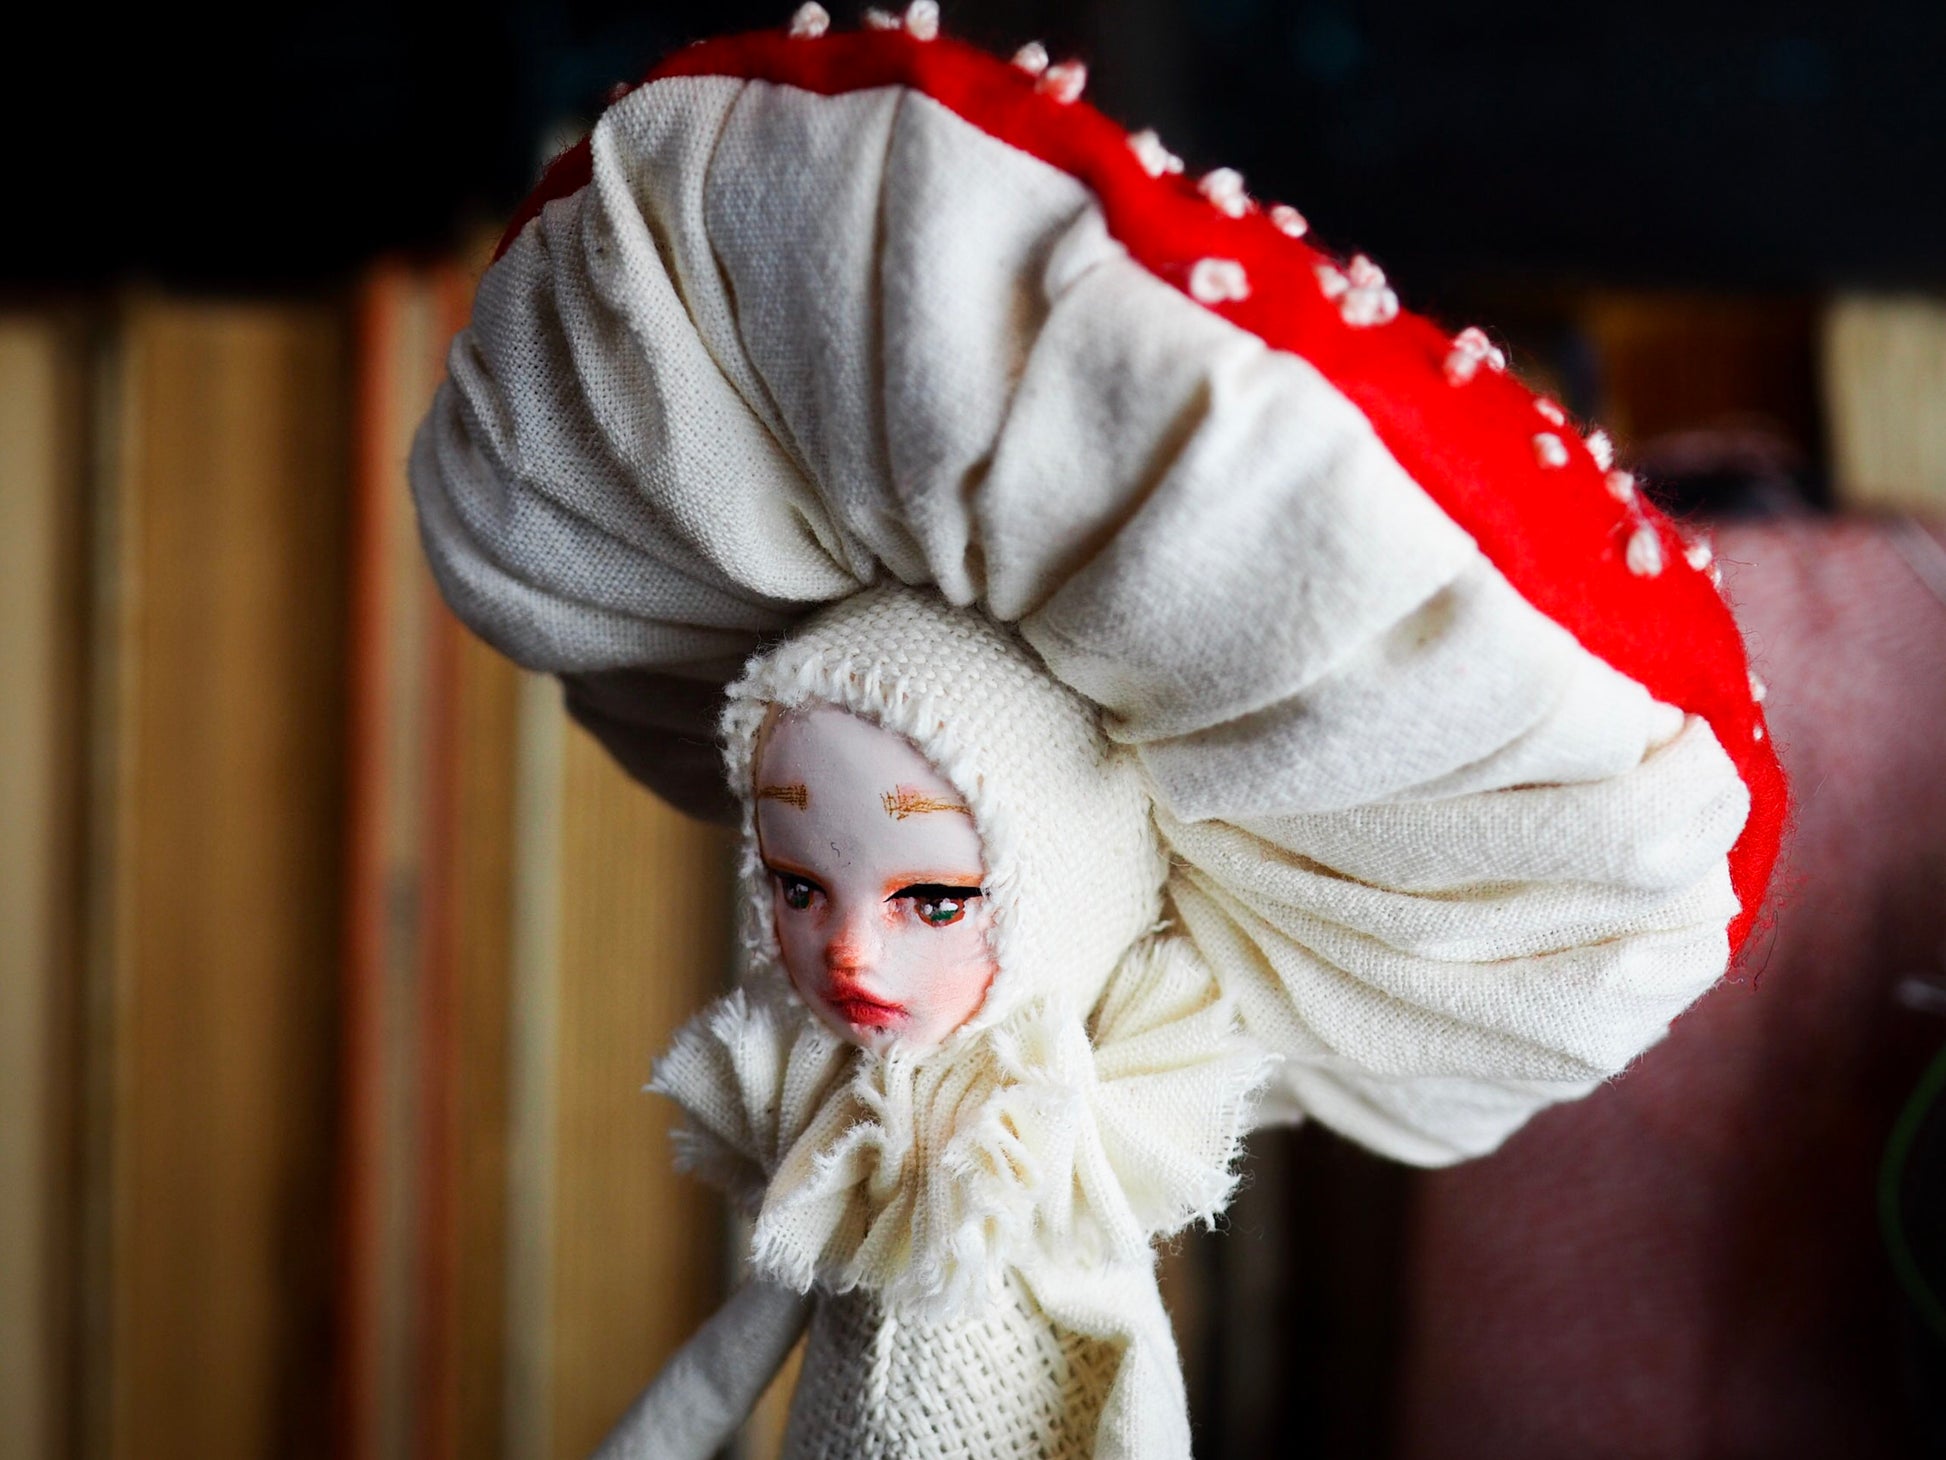 MUSHROOM SPECIMEN N. 3 - Original woodlands handmade art doll by Danita Art, Art Doll by Danita Art